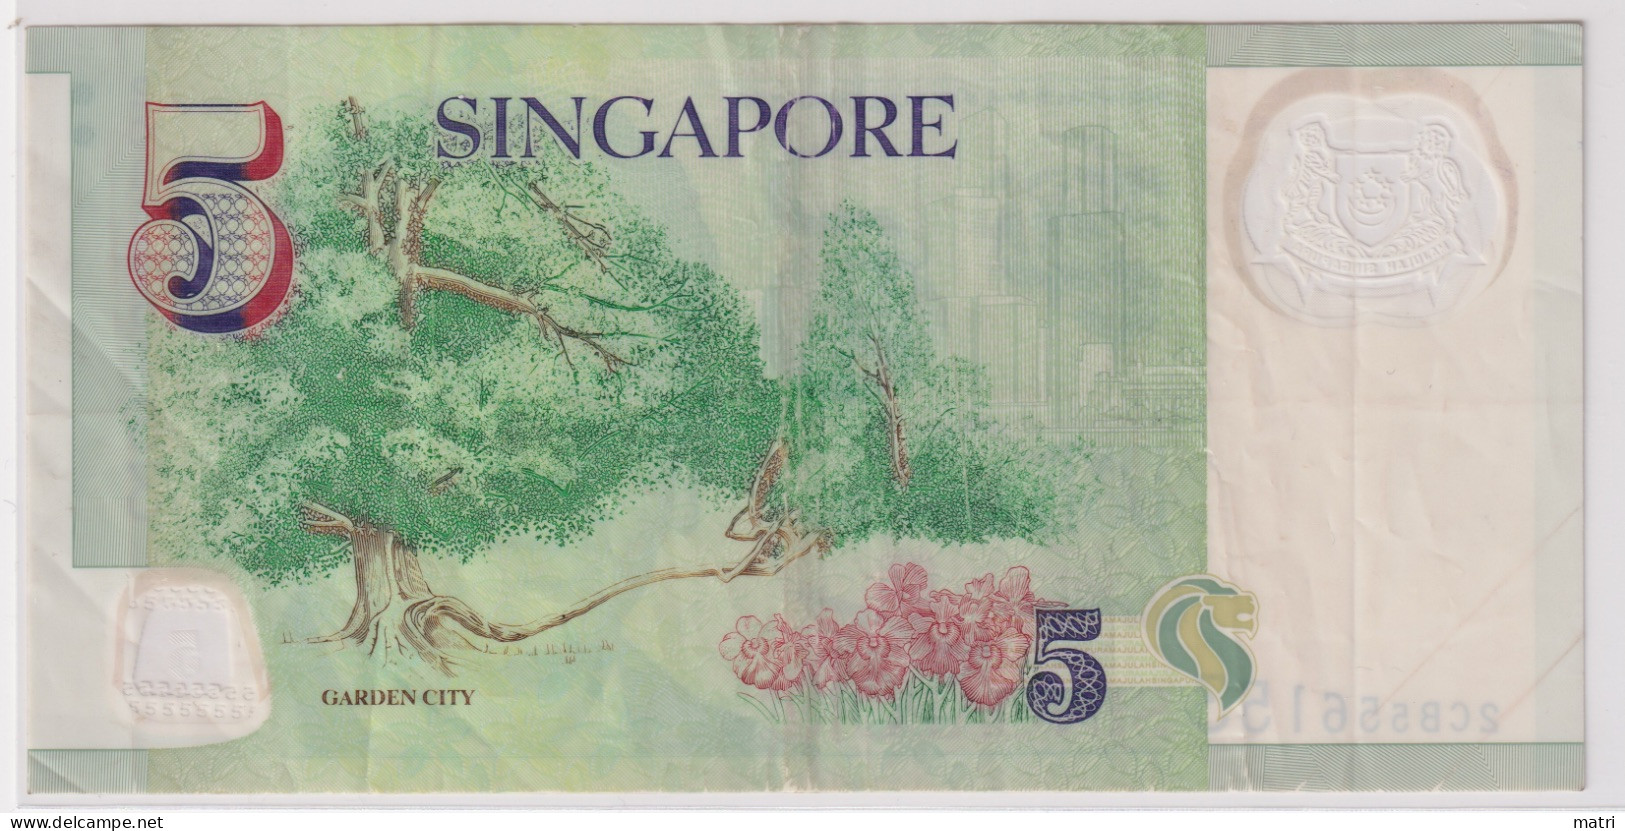 Singapore 5 Dollars - Singapur